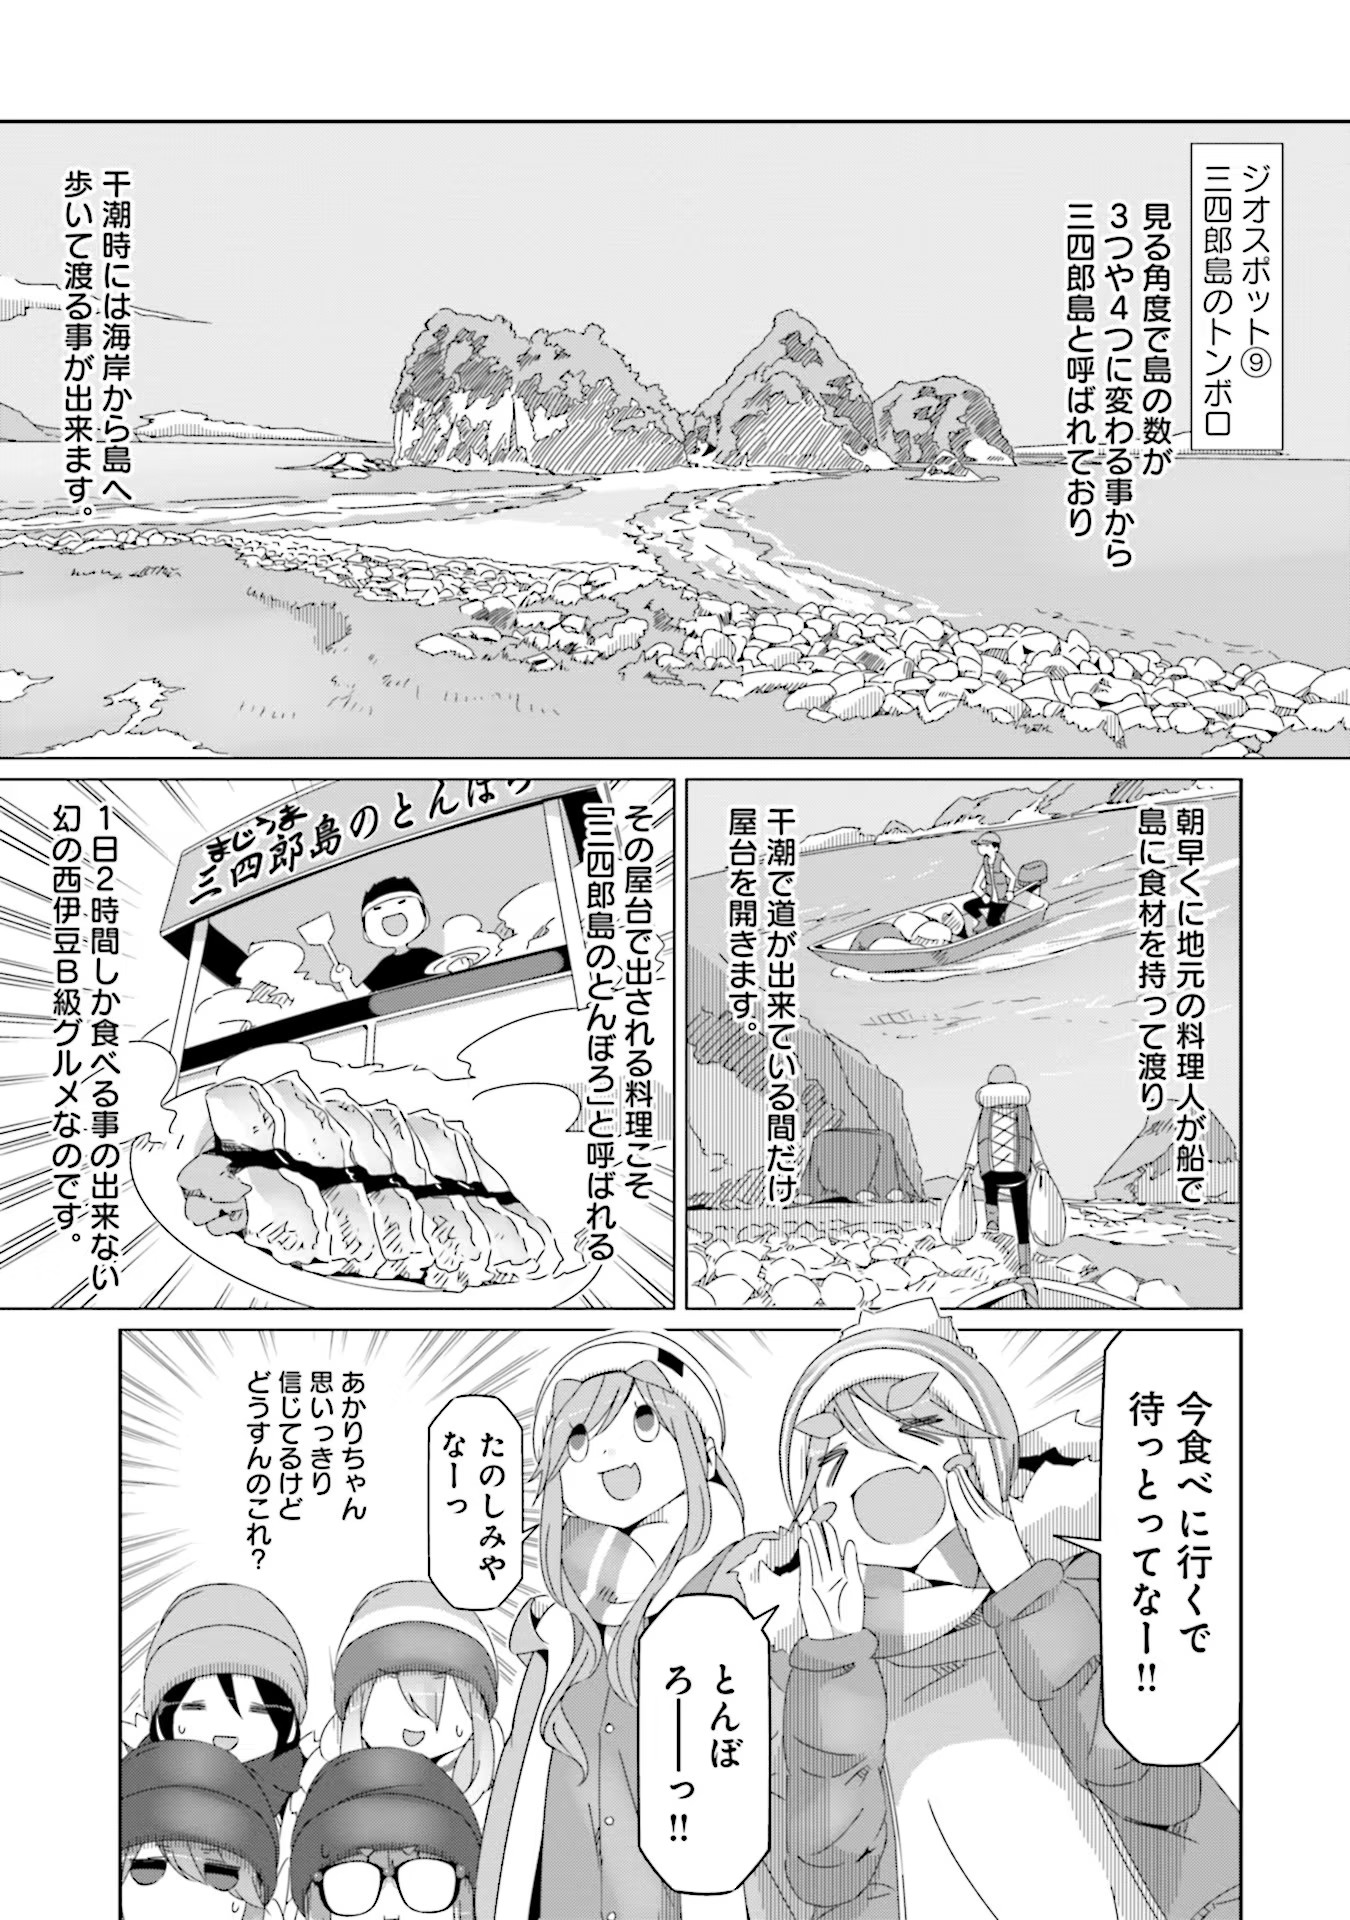 Yuru Camp - Chapter 49 - Page 1